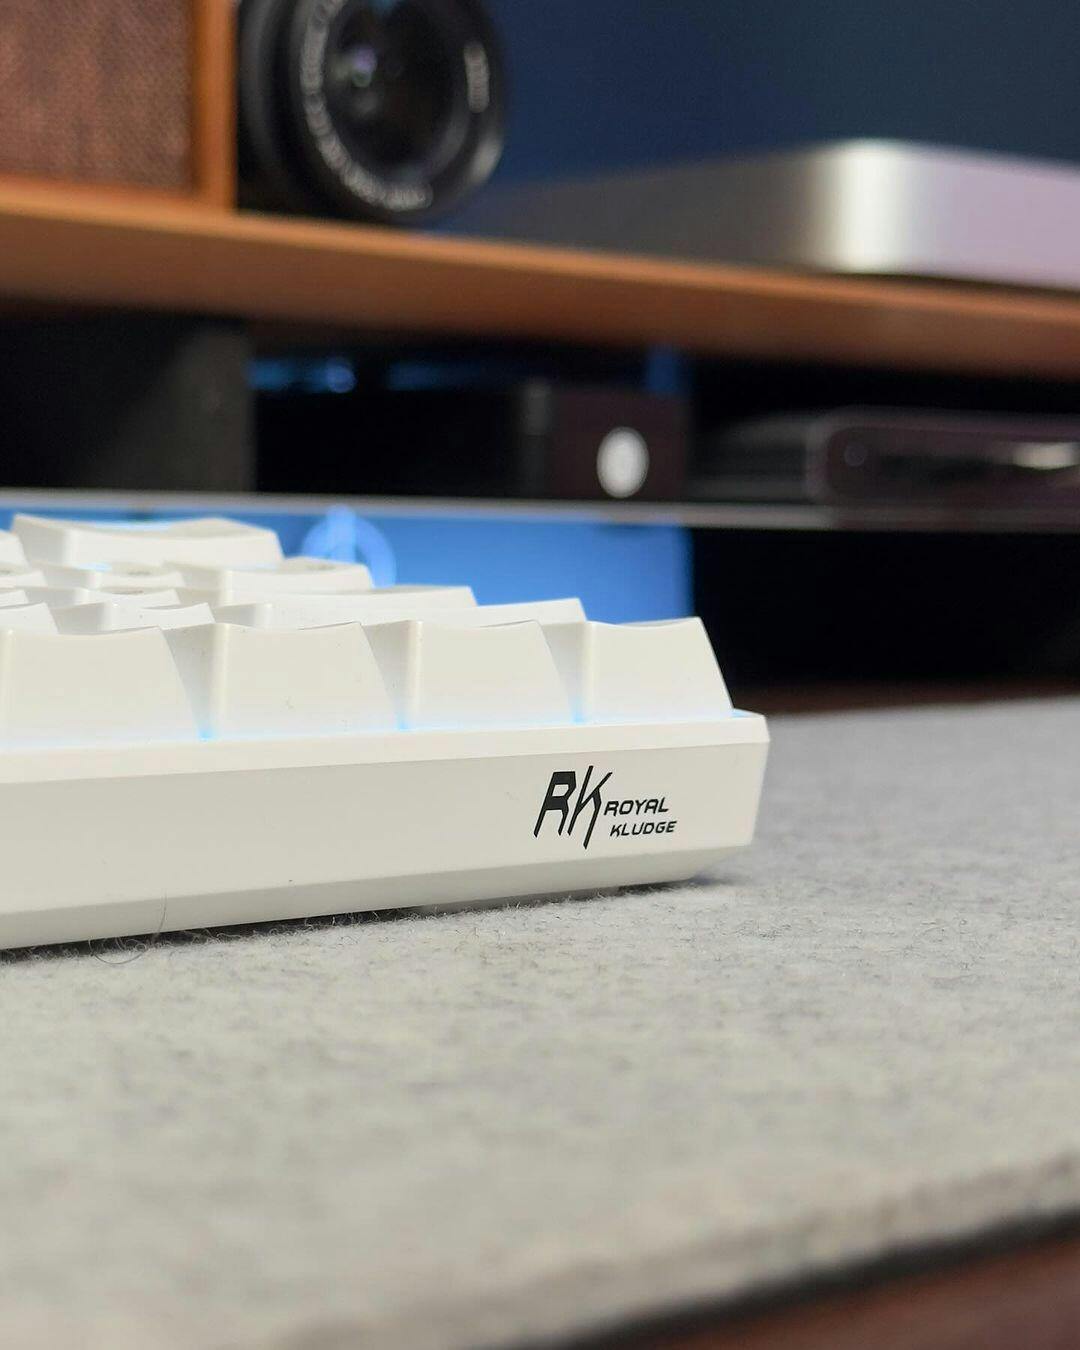 ROYAL KLUDGE RK61 60% White Wireless Mechanical Gaming Keyboard